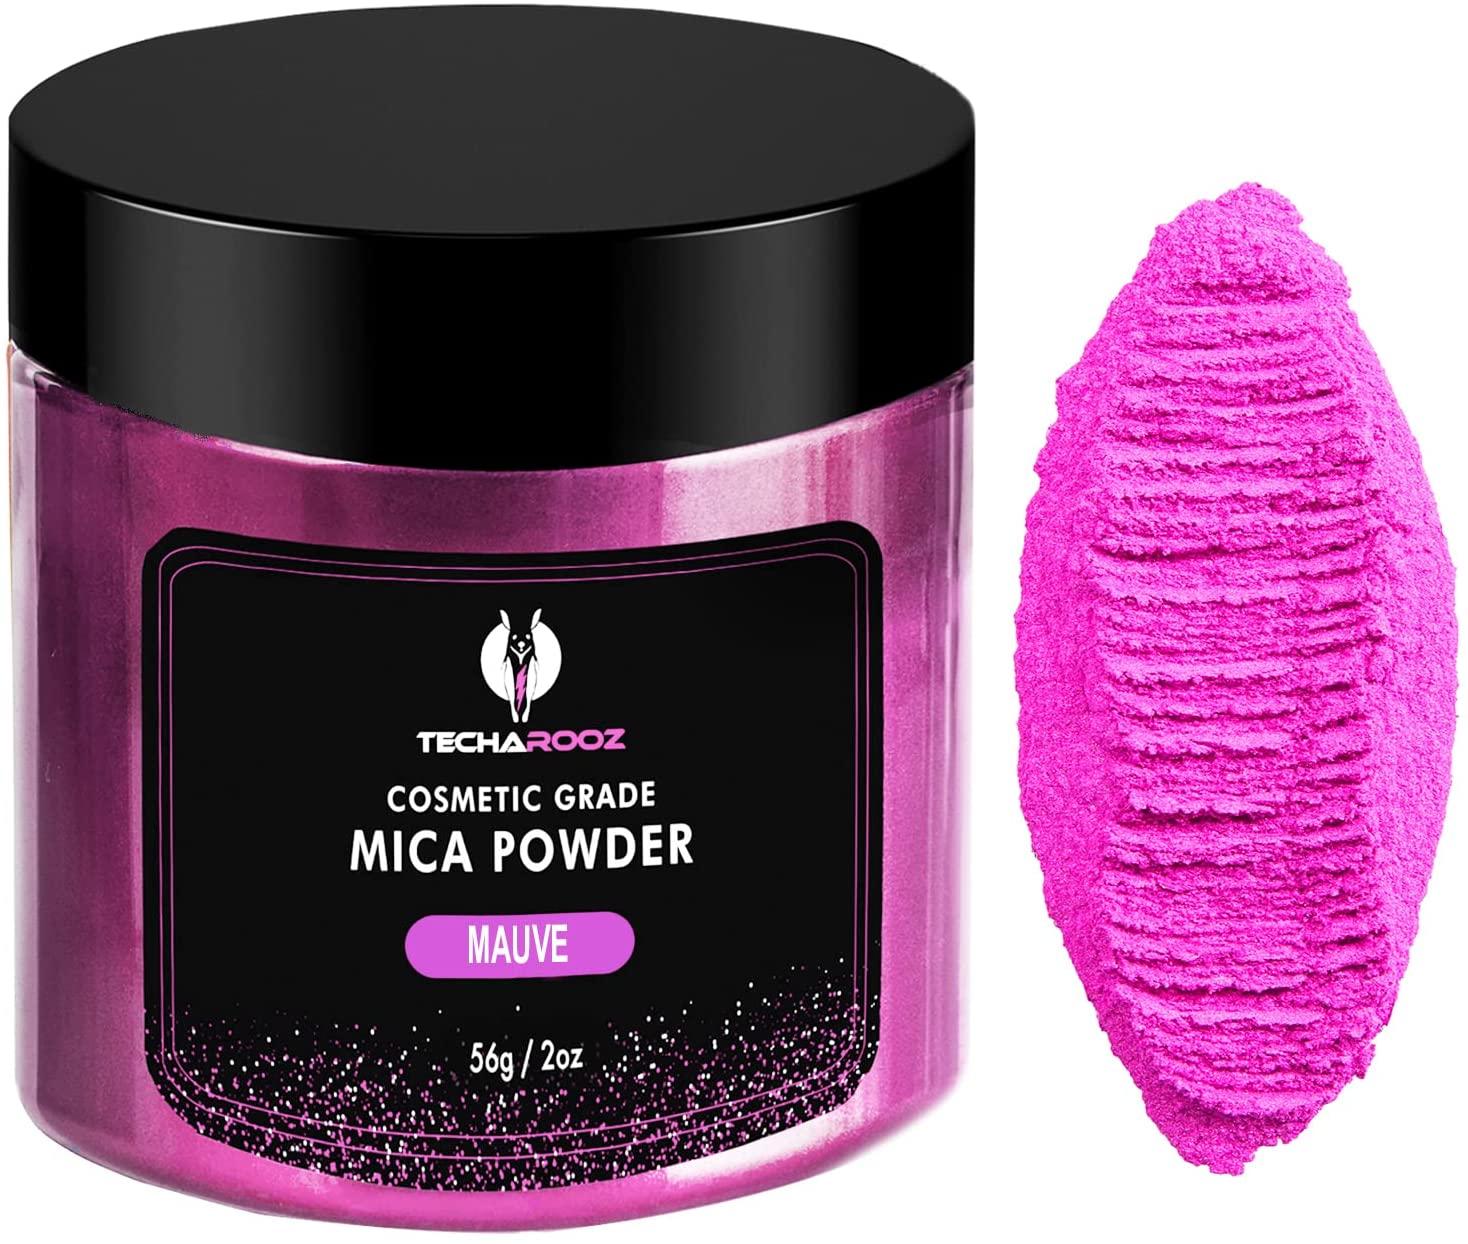 LILAC Mica Powder Pigment, Cosmetic Grade, Mica Powder for Resin